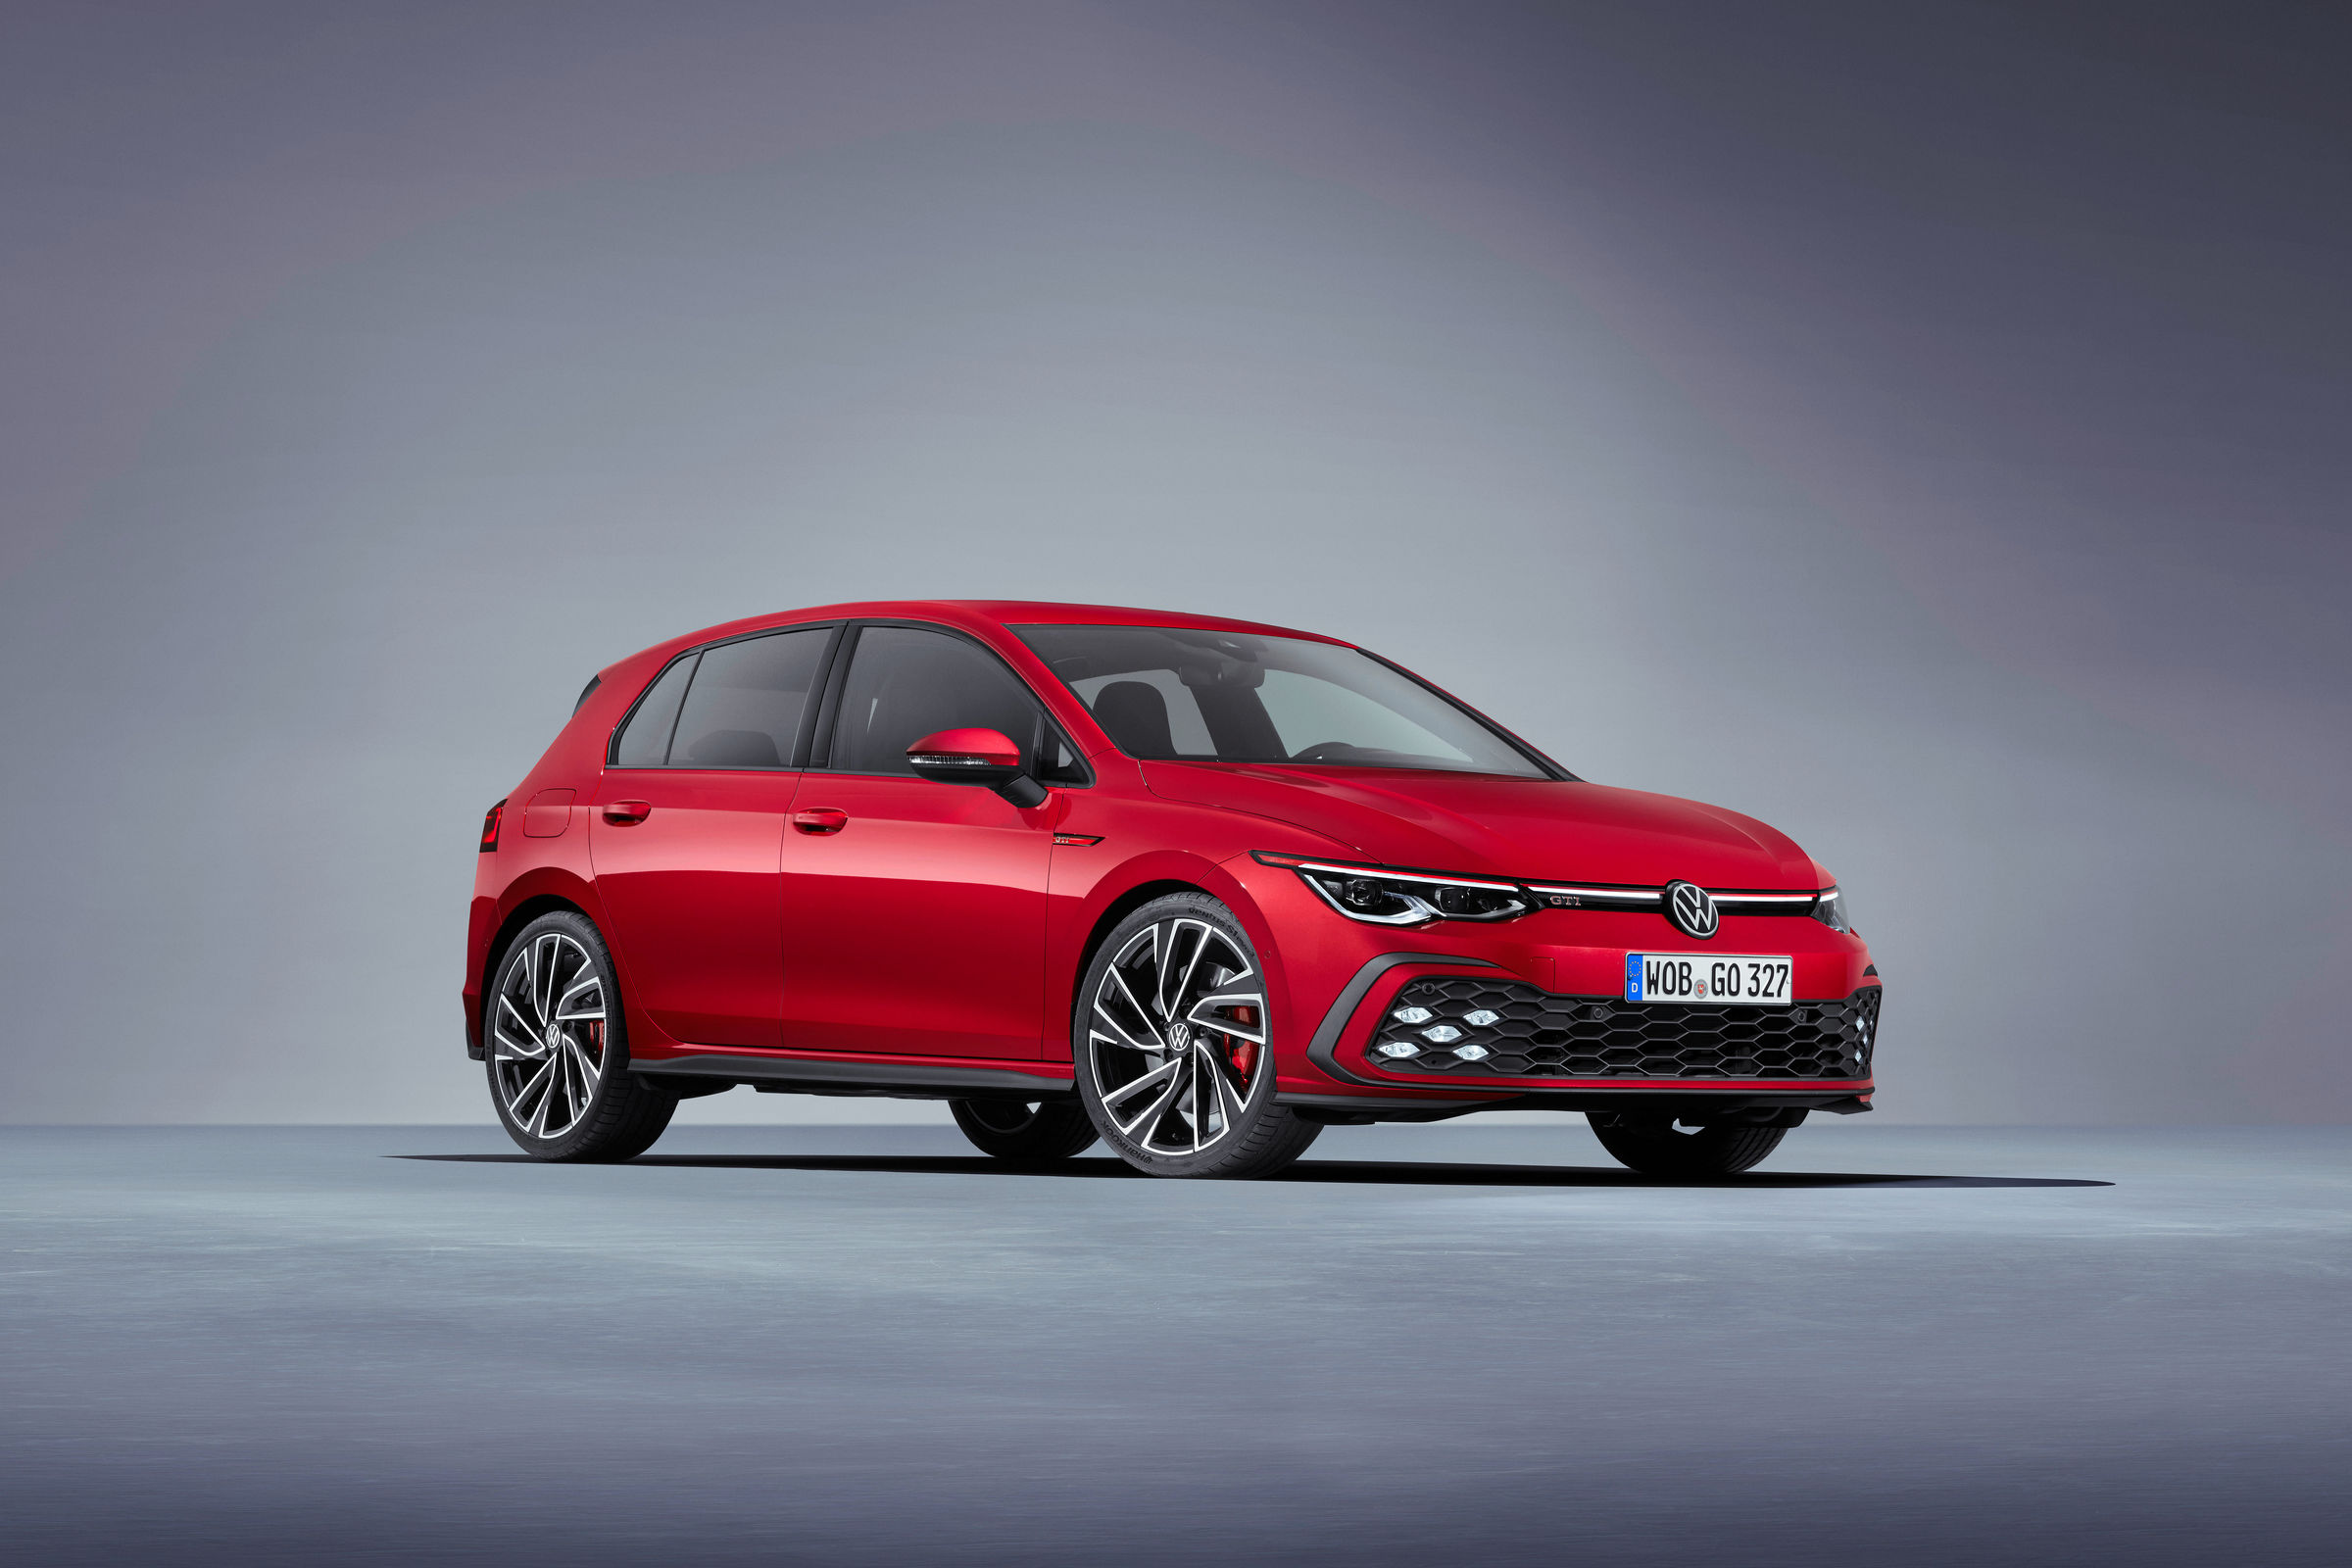 Volkswagen Cria Estande Virtual Para Apresentar Novos Modelos Da Marca